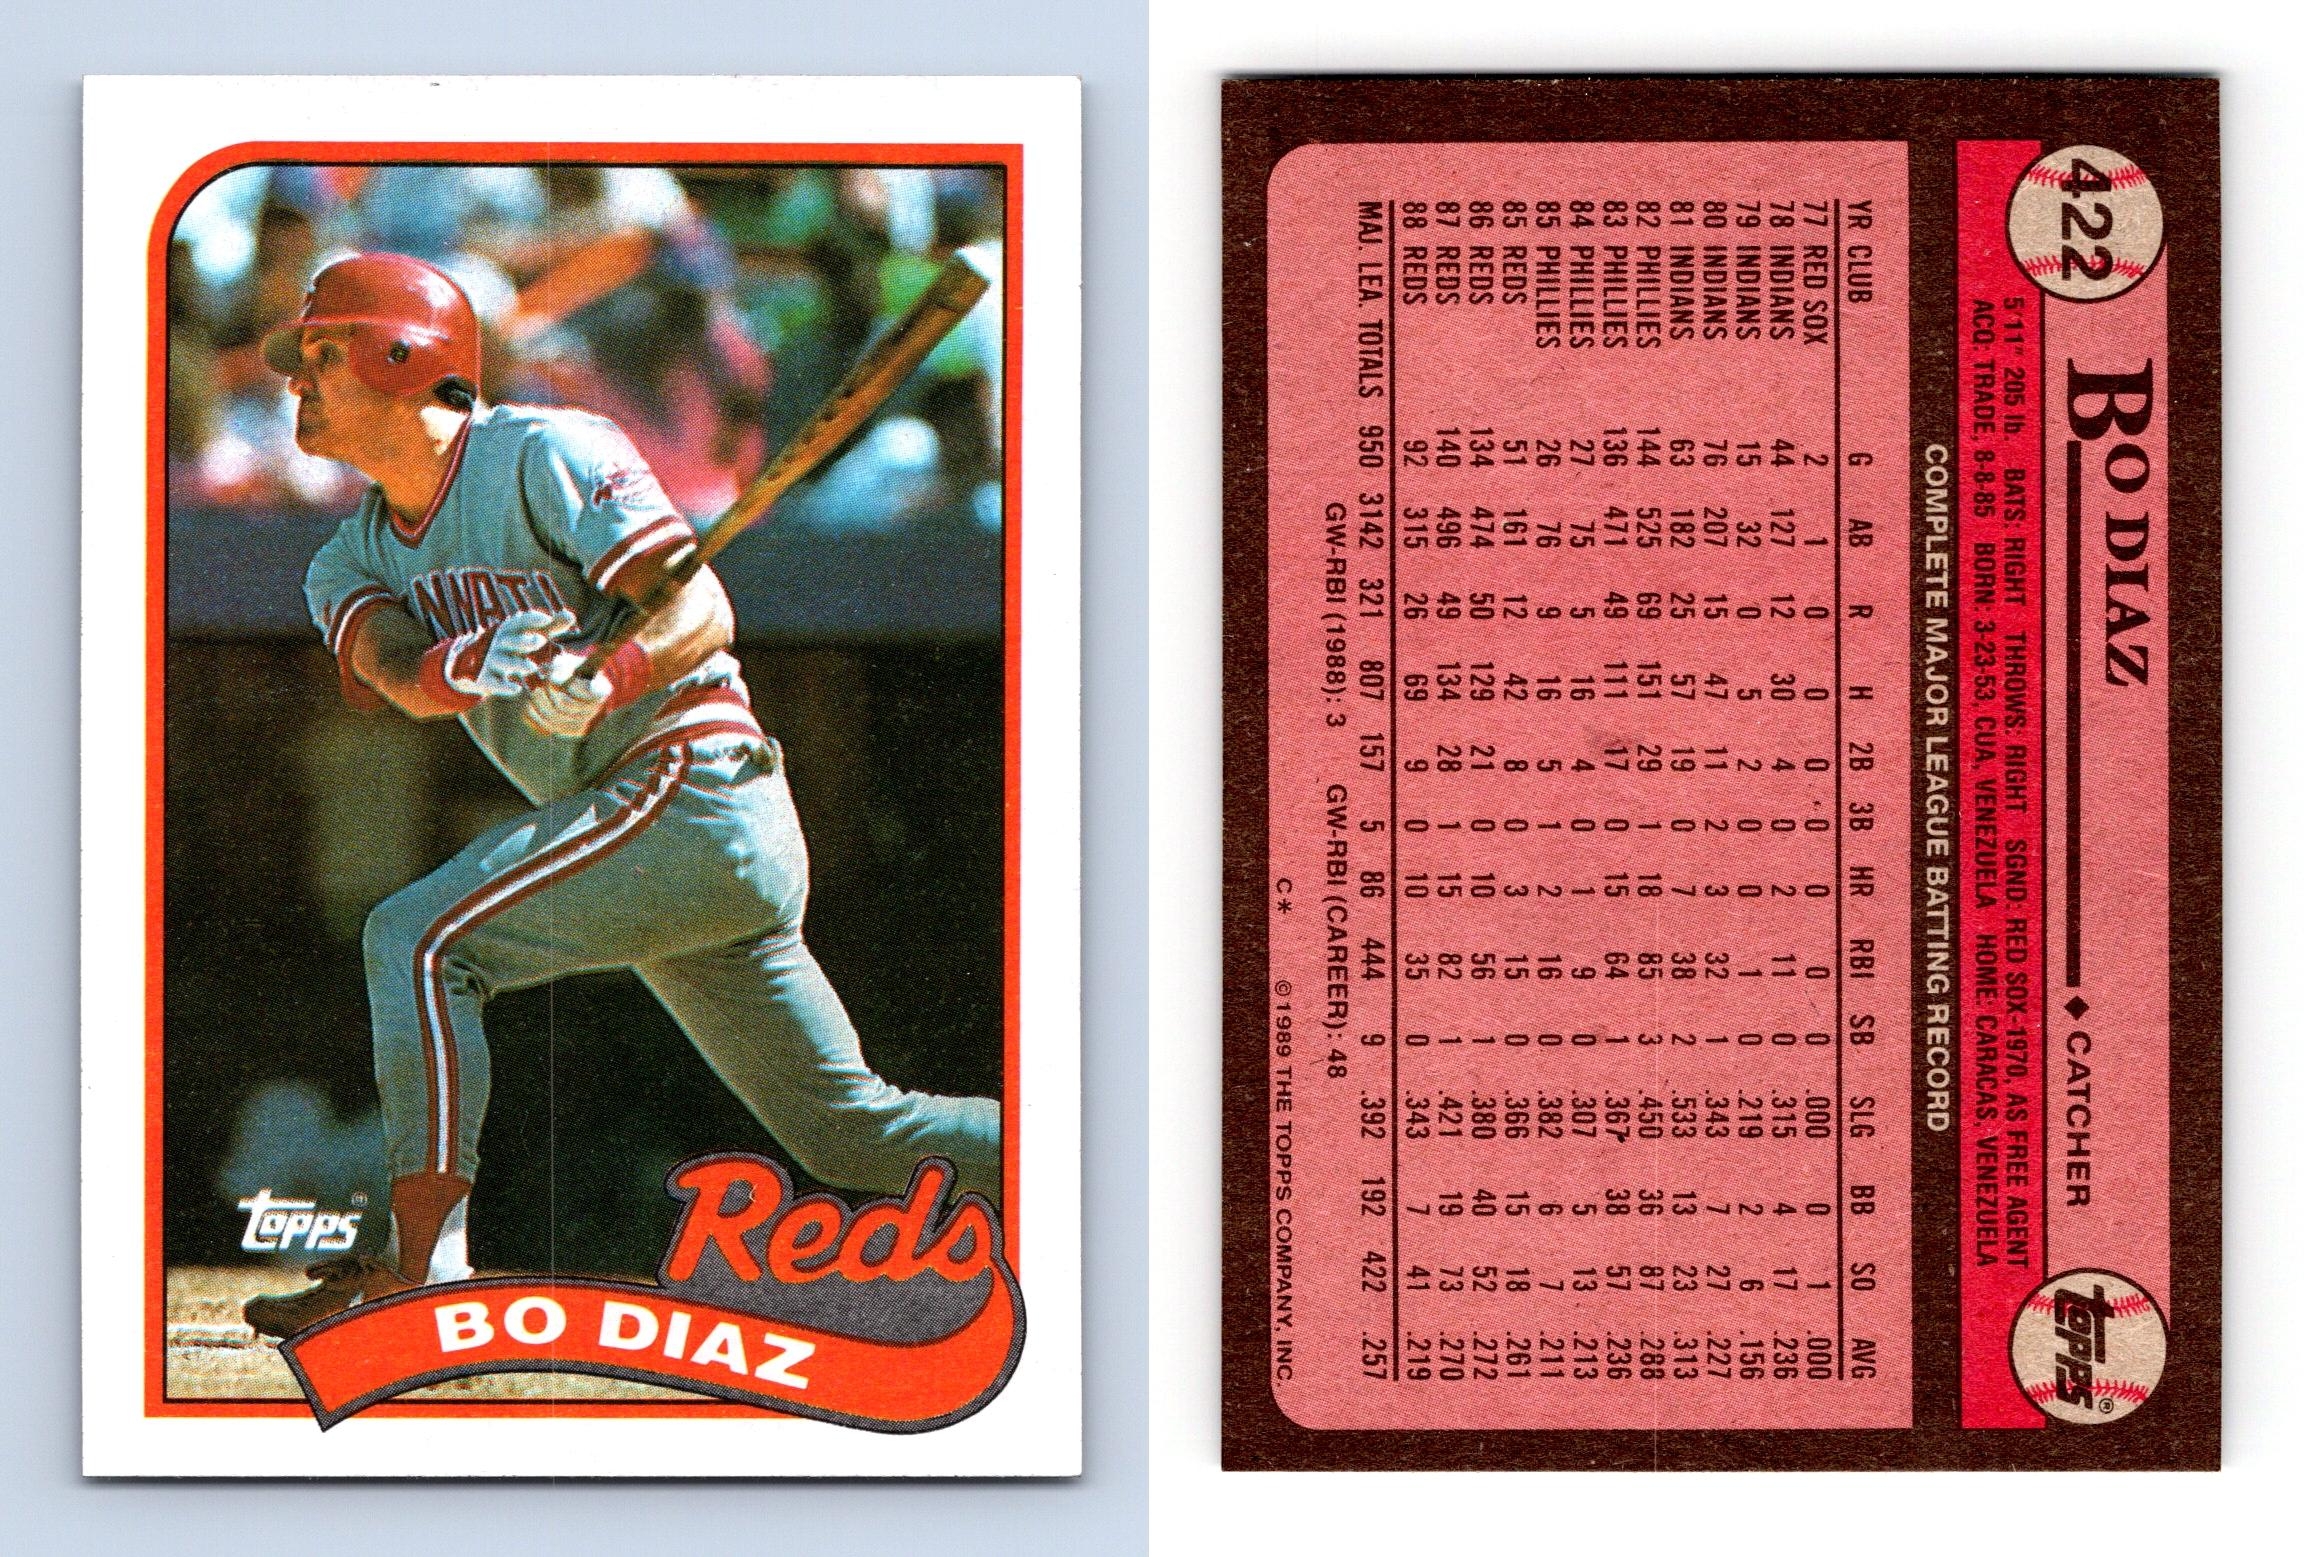  Baseball MLB 1989 Topps #757 Brady Anderson RC Orioles